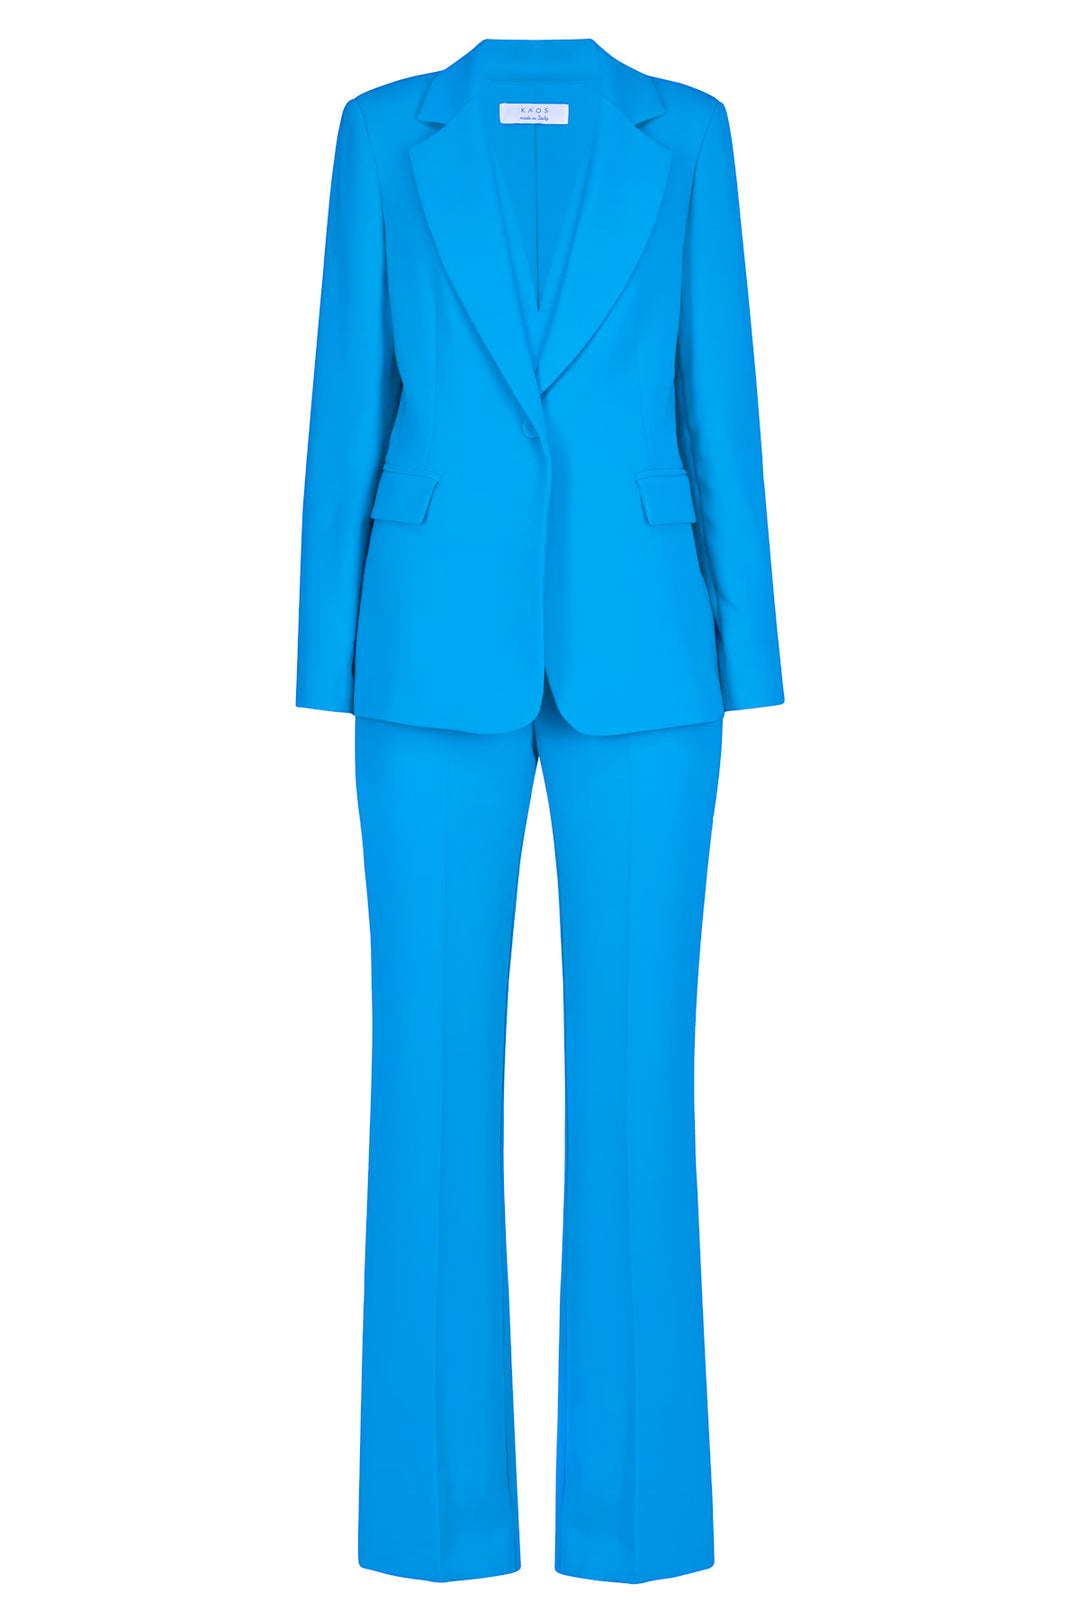 KAOS Tailleur coordinato top giacca pantalone bluette - Mancinelli 1954